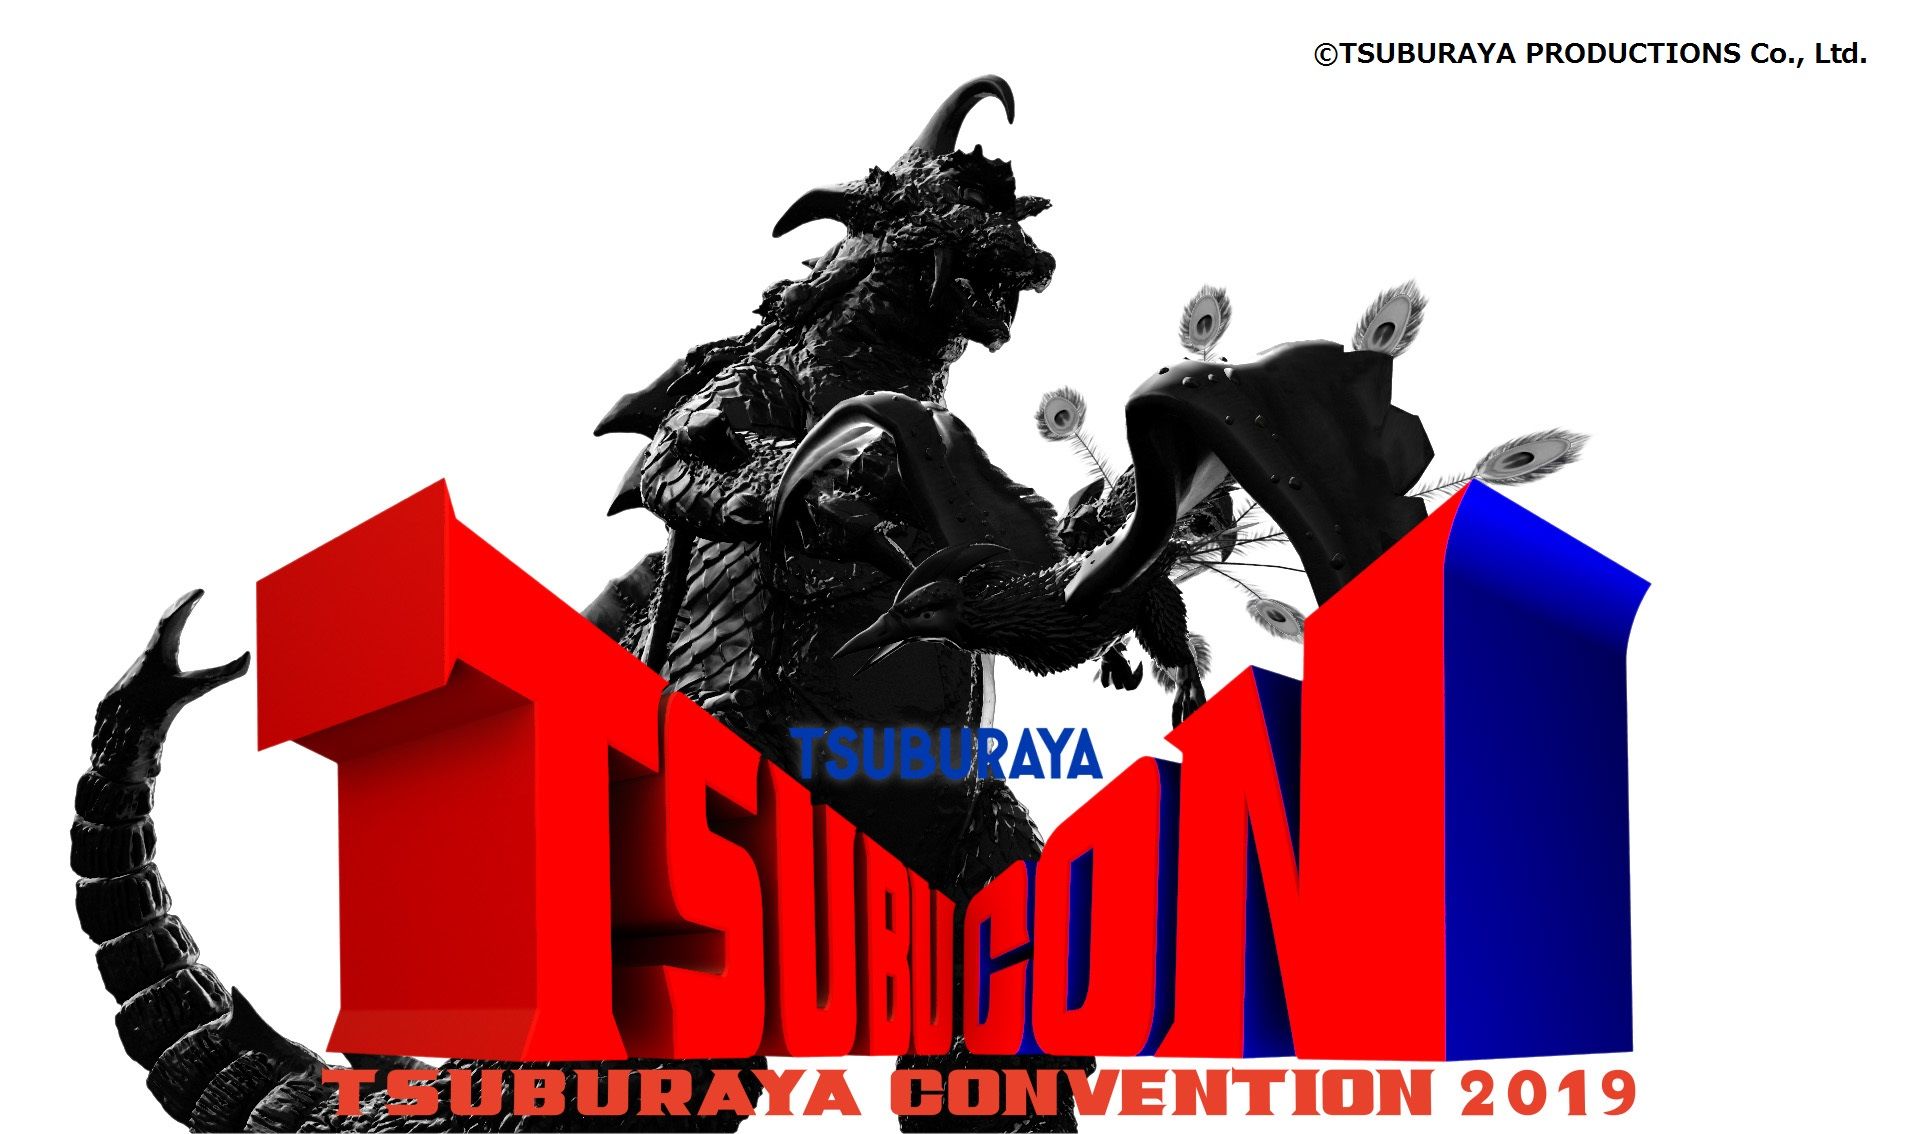 TSUBURAYA CONVENTION 2019 “Opening Ceremony”